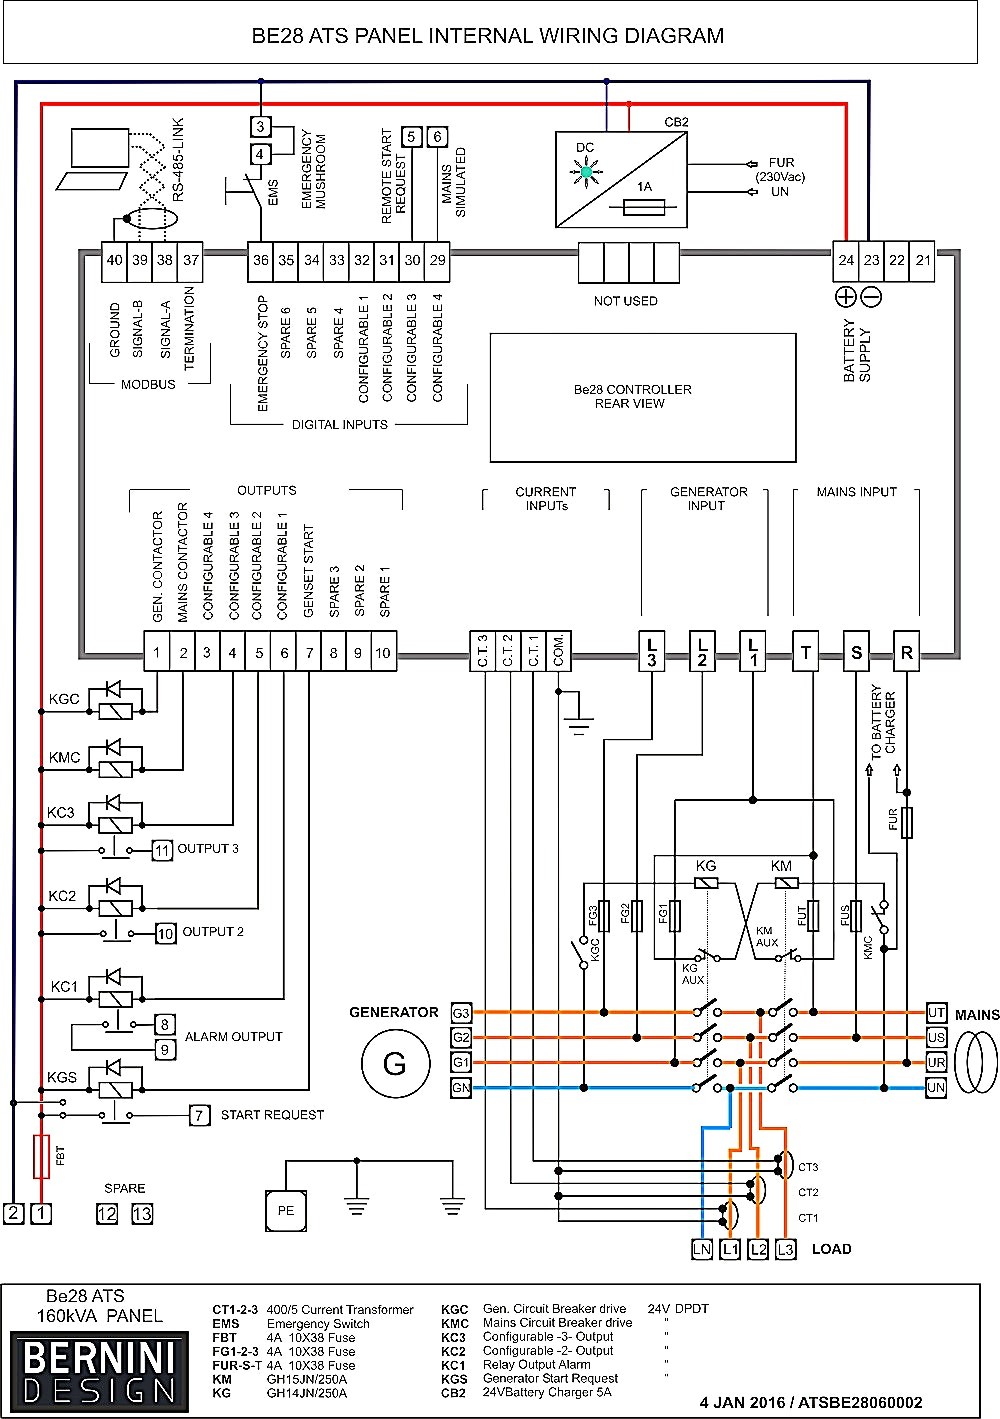 Generac Automatic Transfer Switch Wiring Diagram Simple Design Generator Transfer Switch Wiring Diagram Generac Transfer